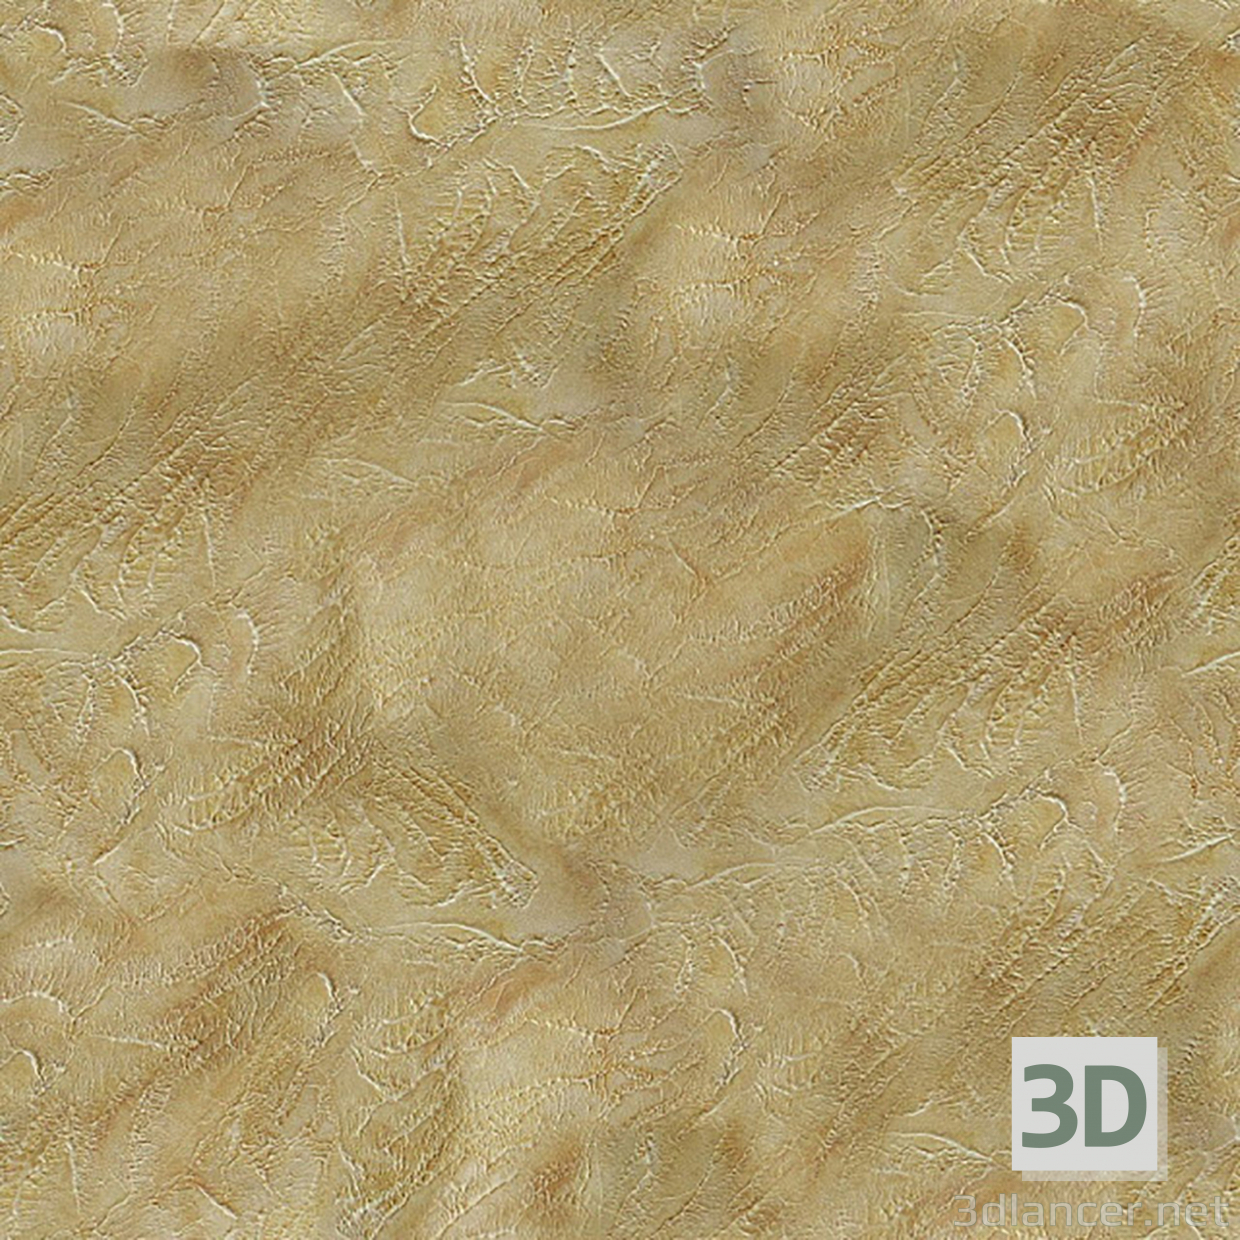 Texture plaster Alpha Fondo Per Elegance 2 diff free download - image